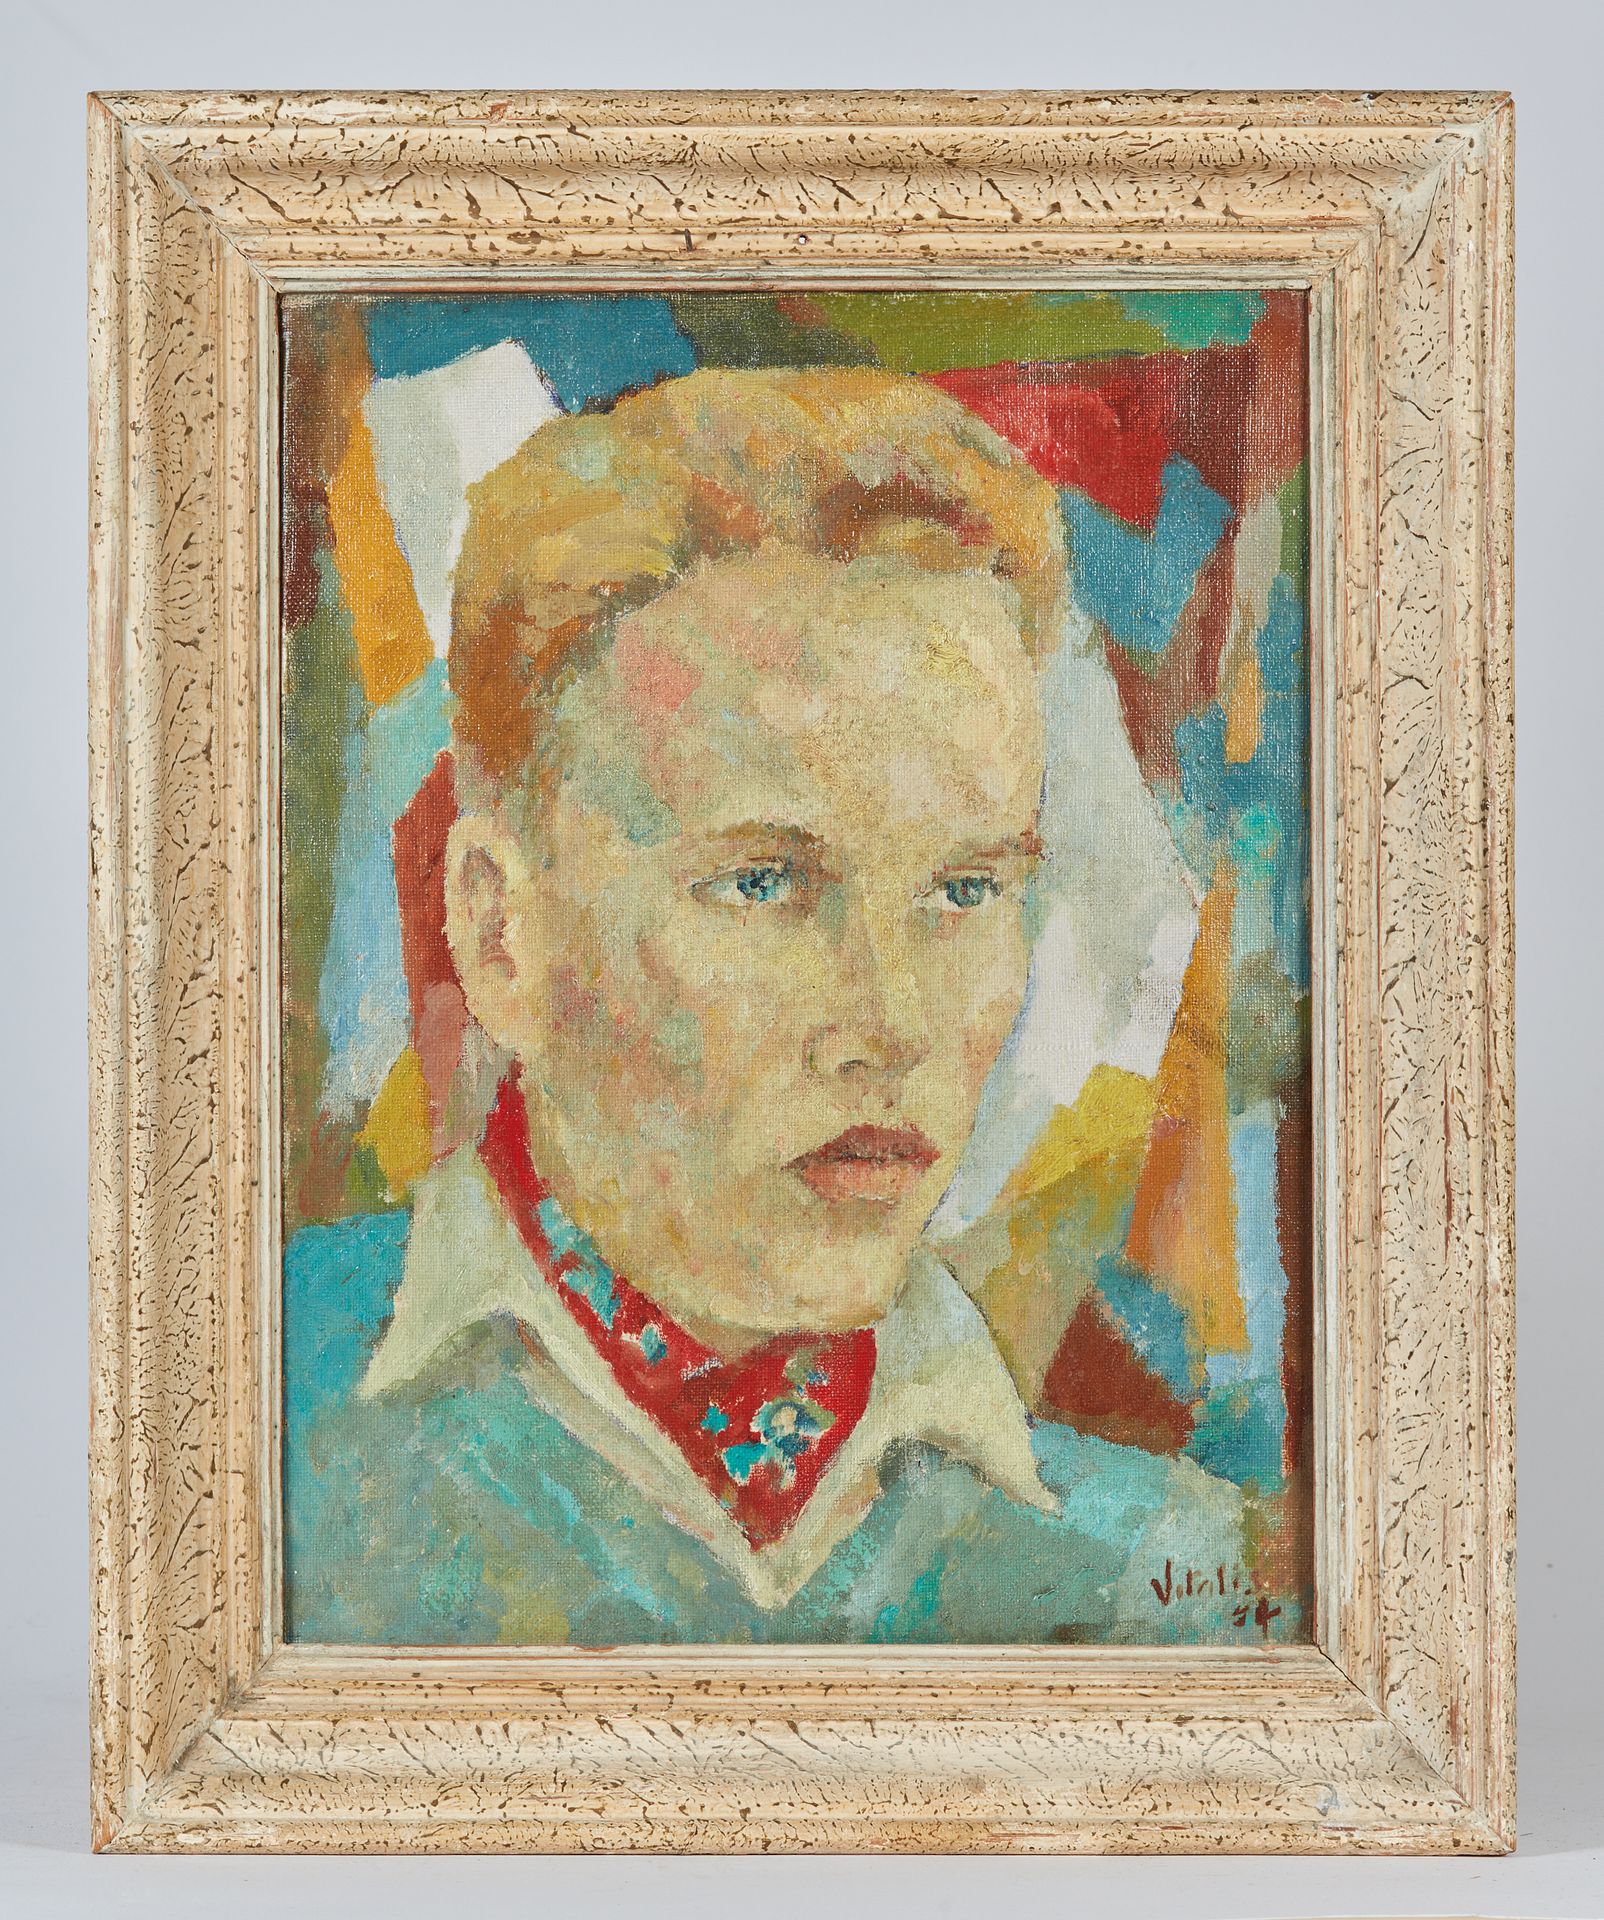 Null 马卡里奥-维塔利斯(1898-1990)

戴着红领巾的男子肖像

画布右下方有签名，日期为[19]44。

高度34 - 宽度26厘米